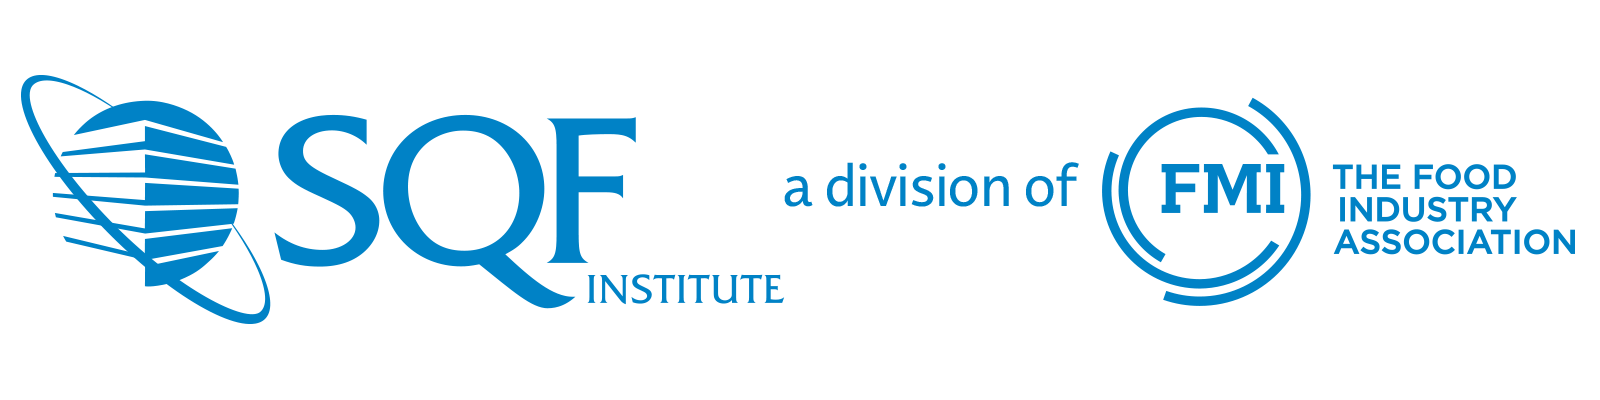 SQF divison of FMI Logo